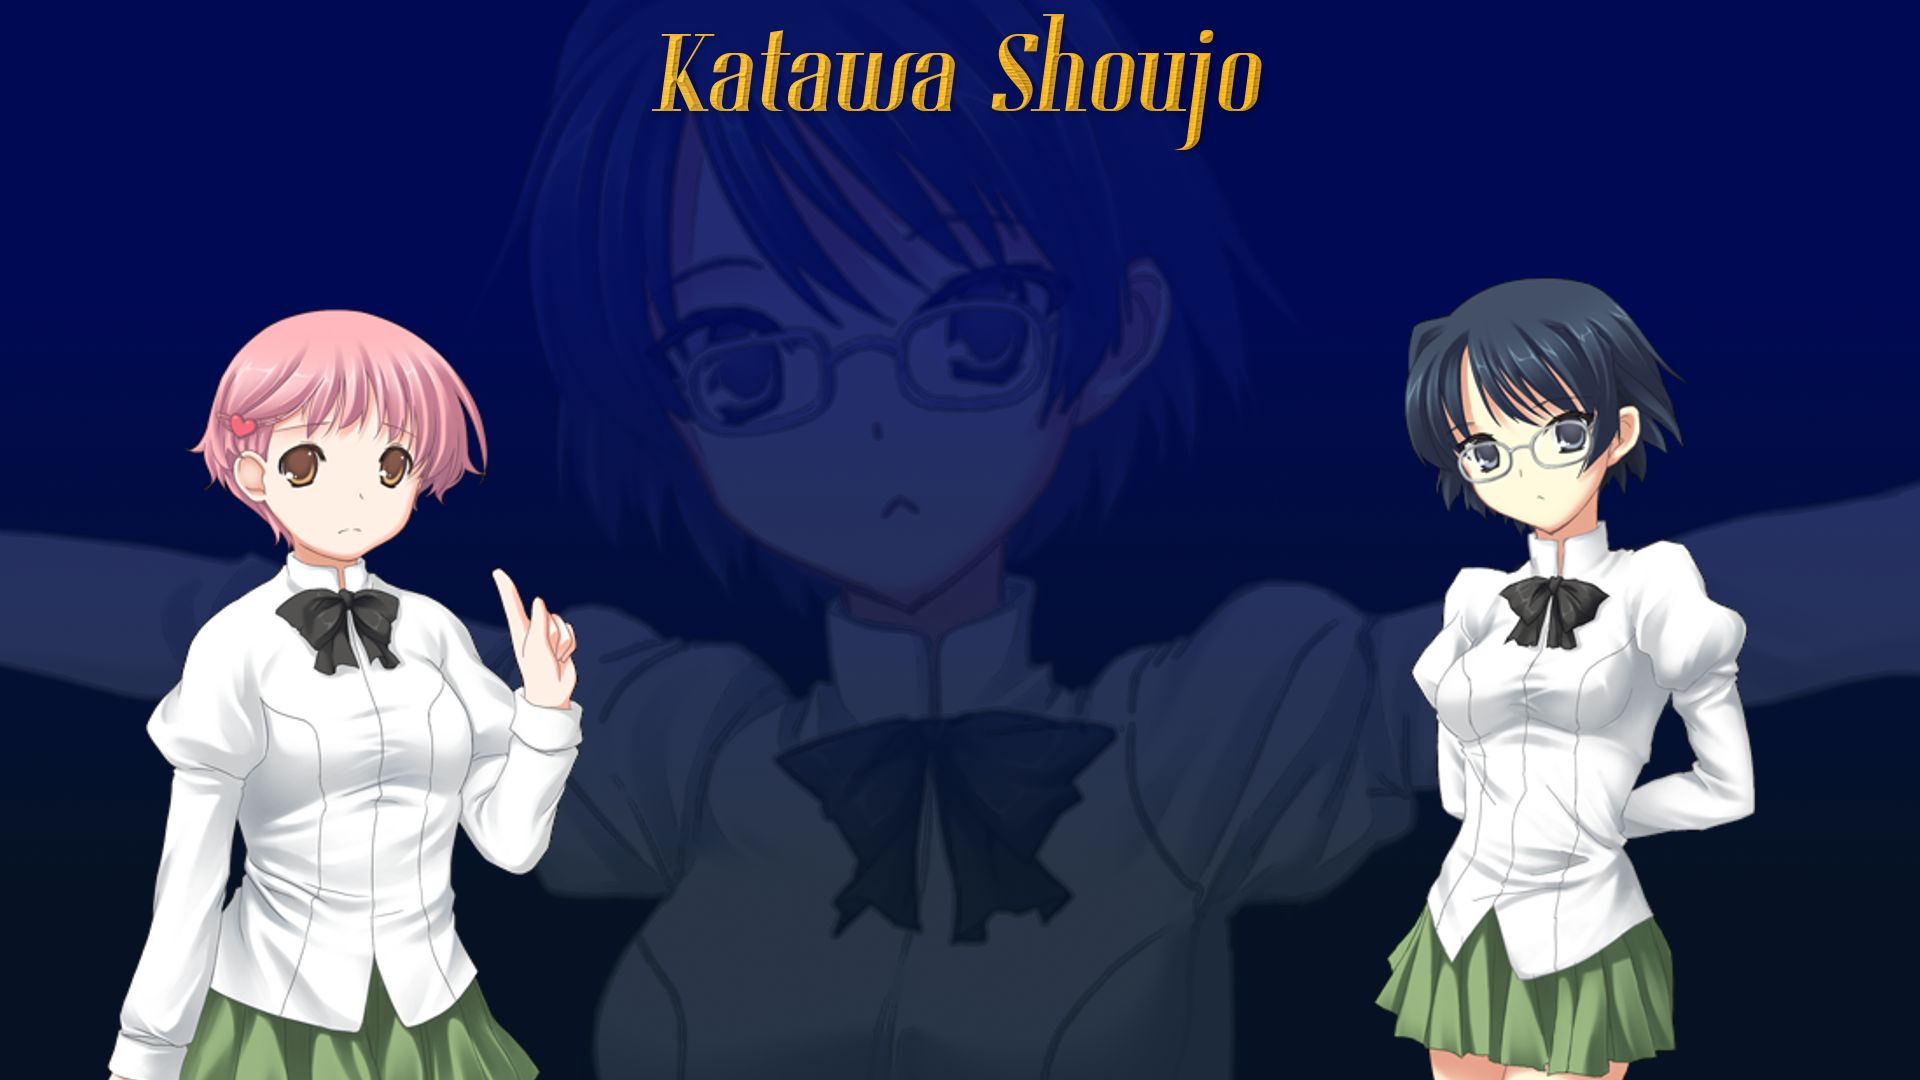 661747 descargar imagen animado, katawa shoujo, juego, manga, shiina mikado, shizune hakamichi: fondos de pantalla y protectores de pantalla gratis